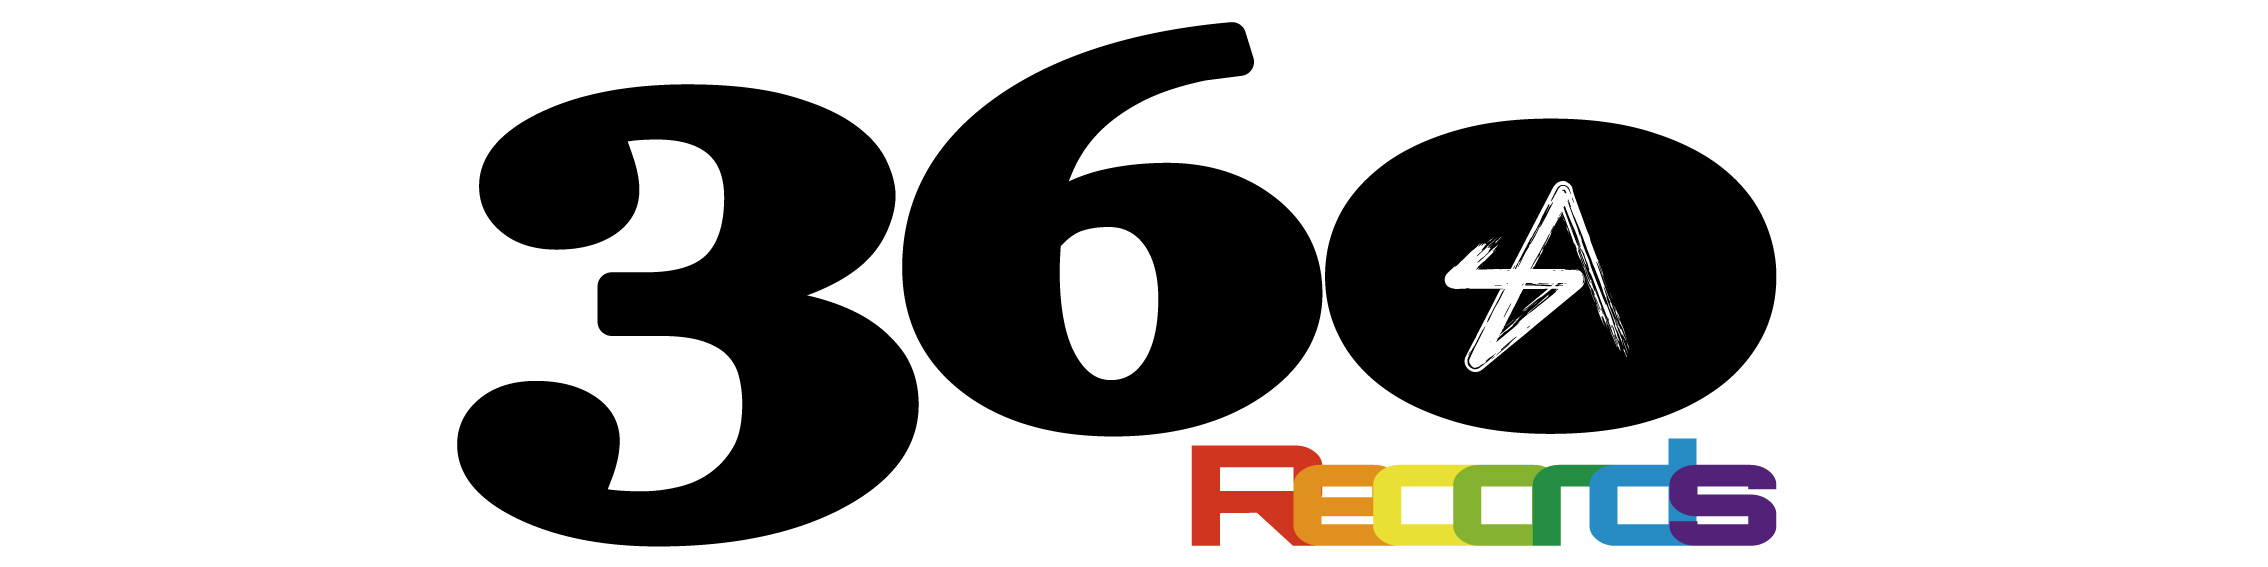 360 Records